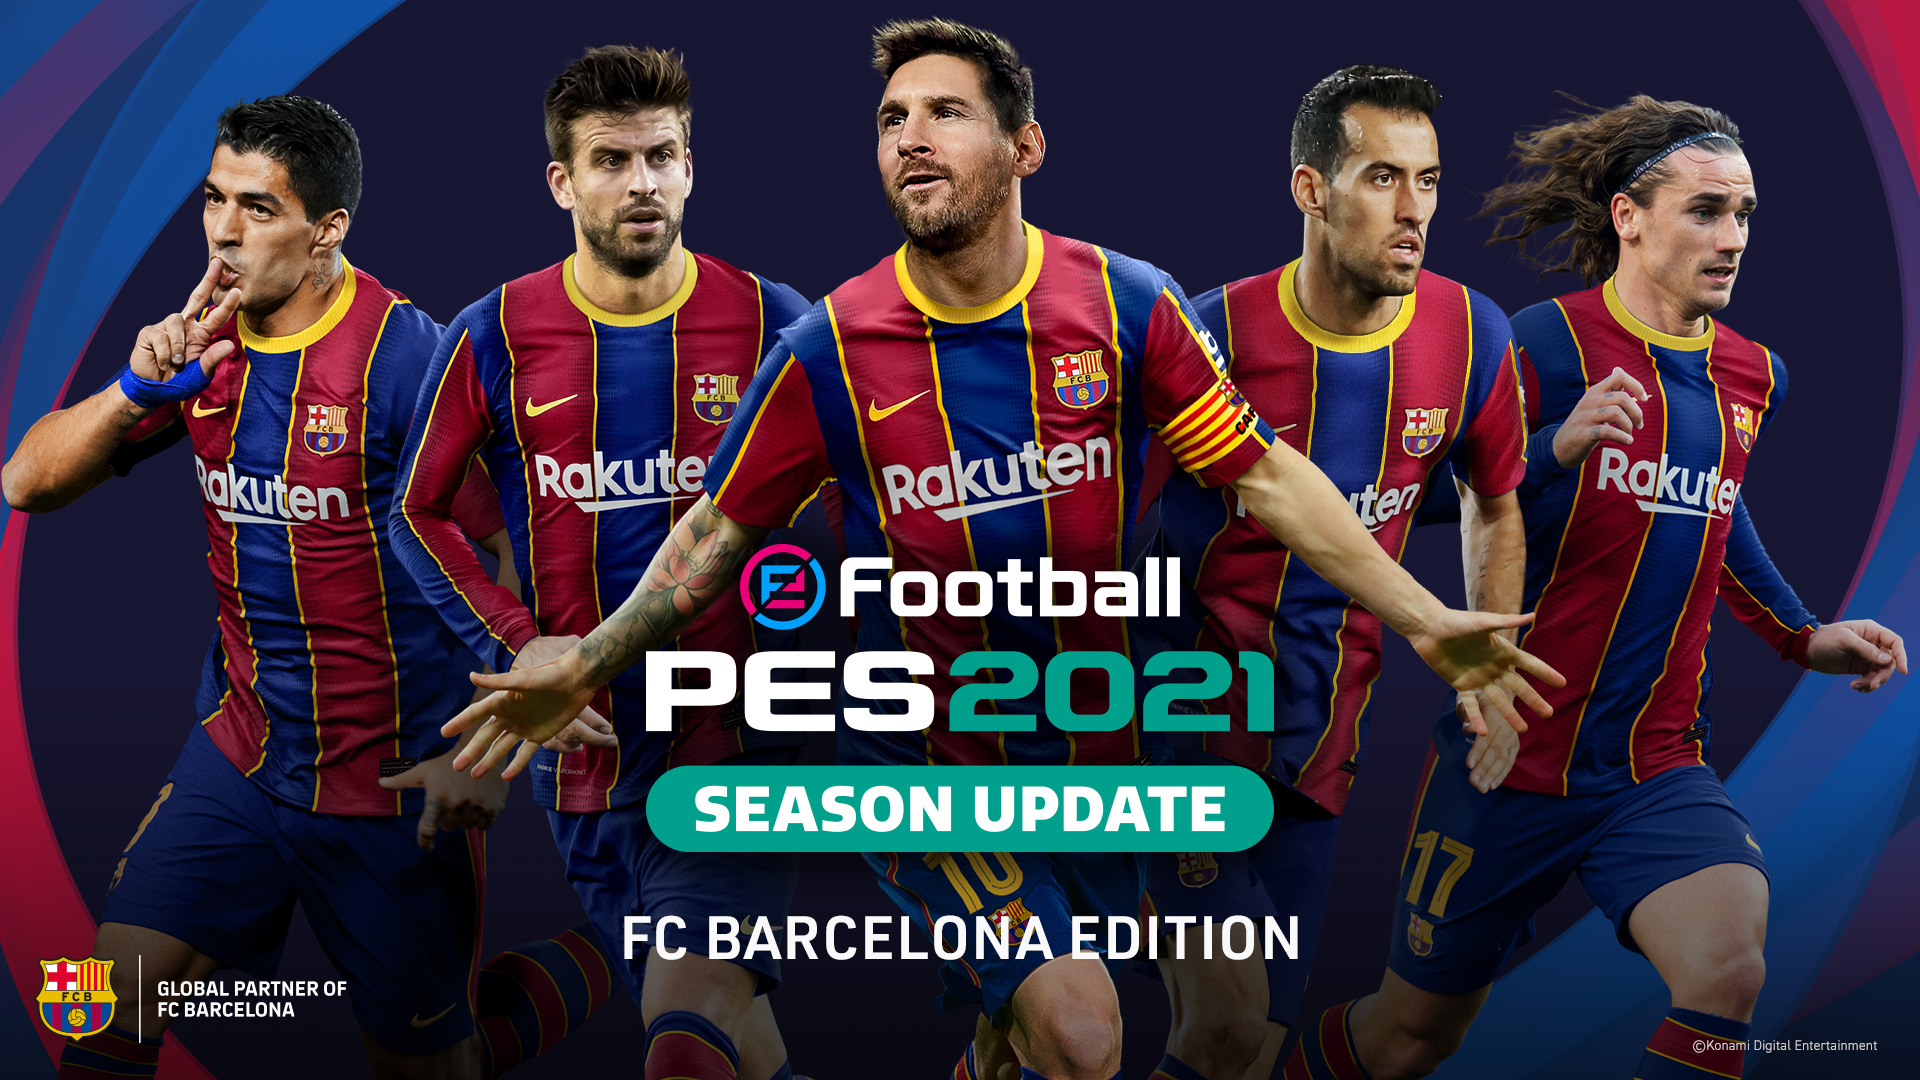 Draad Tijdens ~ Onveilig eFootball PES 2021 Season Update cover revealed | GodisaGeek.com